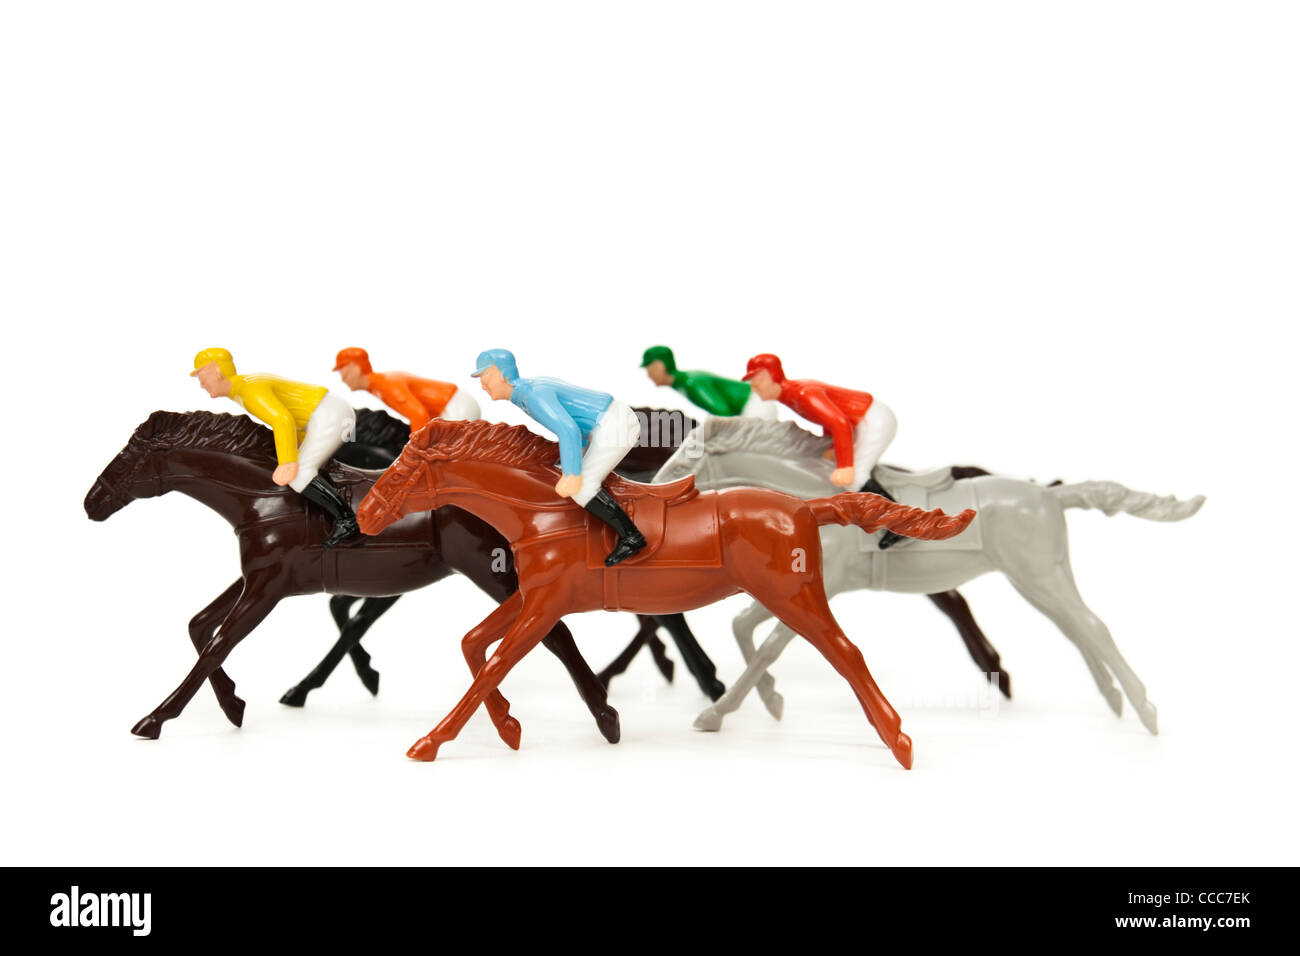 Escalado horse racing gioco di bordo Foto Stock